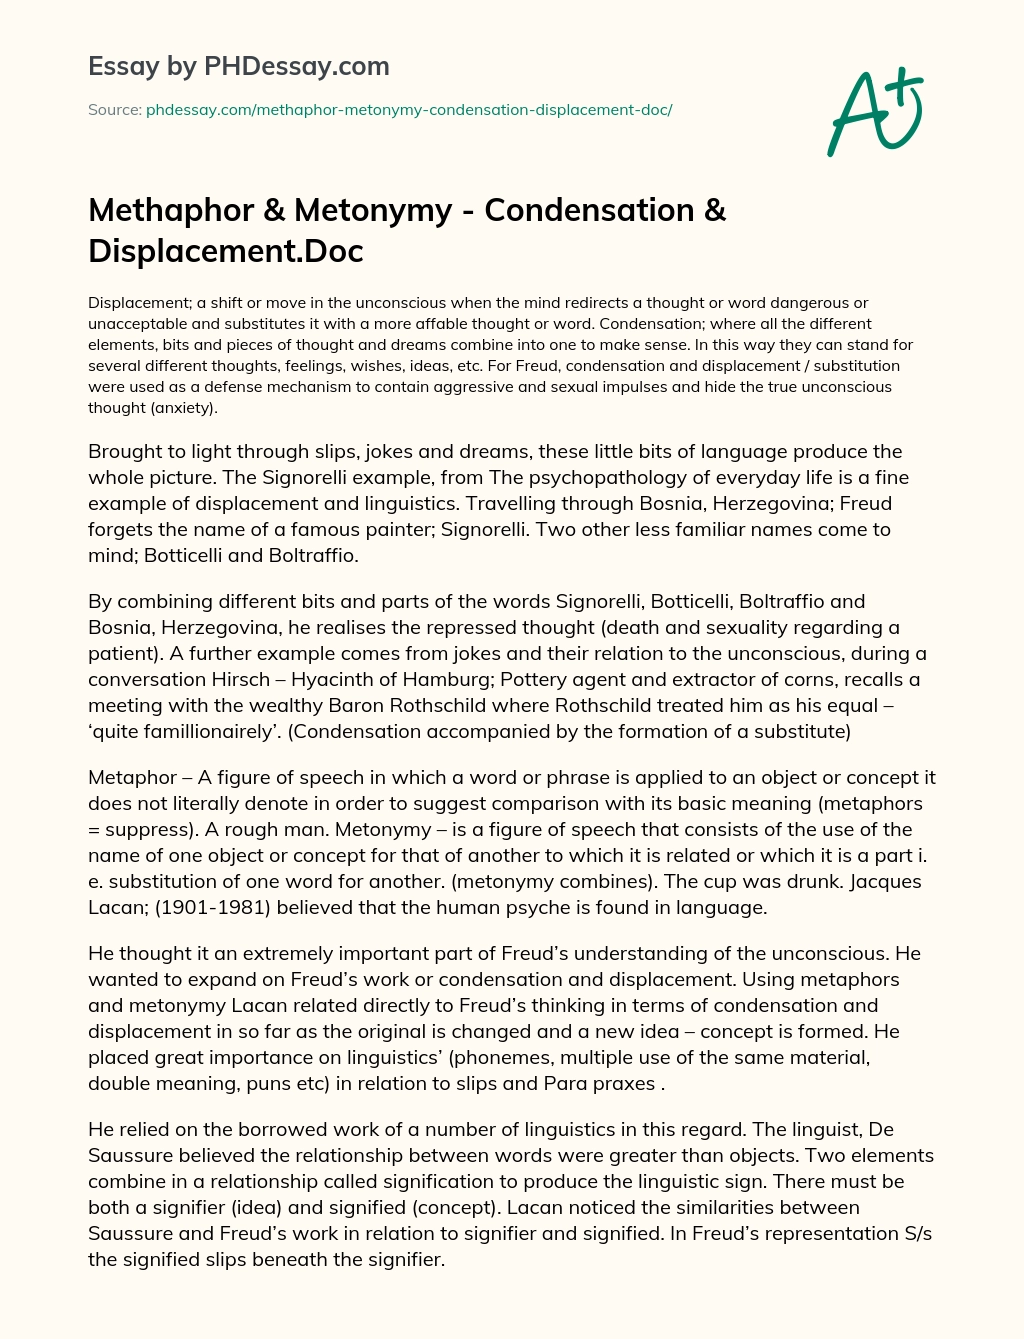 Methaphor & Metonymy – Condensation & Displacement.Doc essay